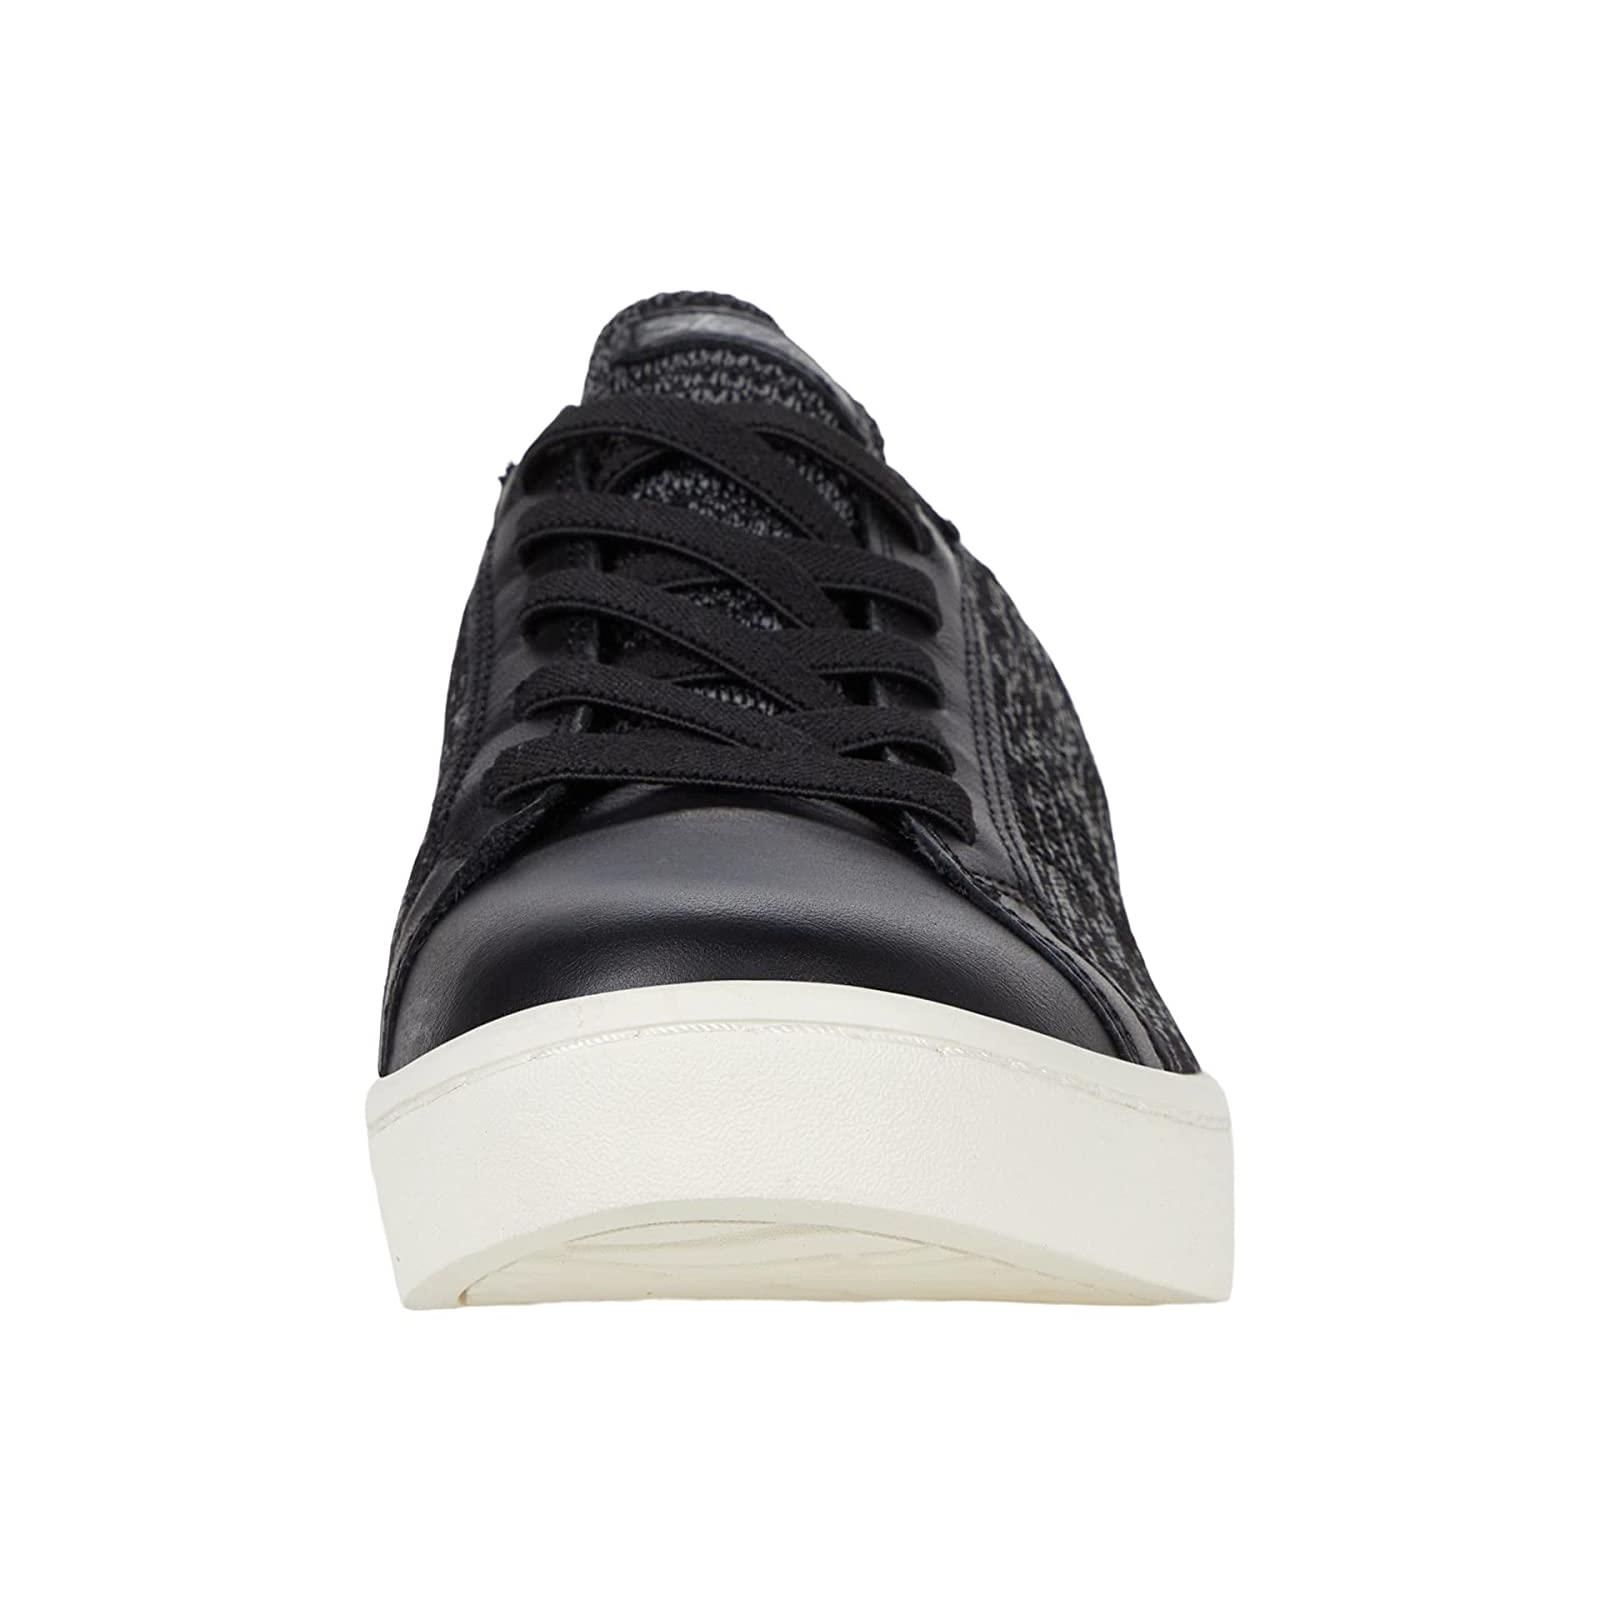 Skechers shoes  - Black 4